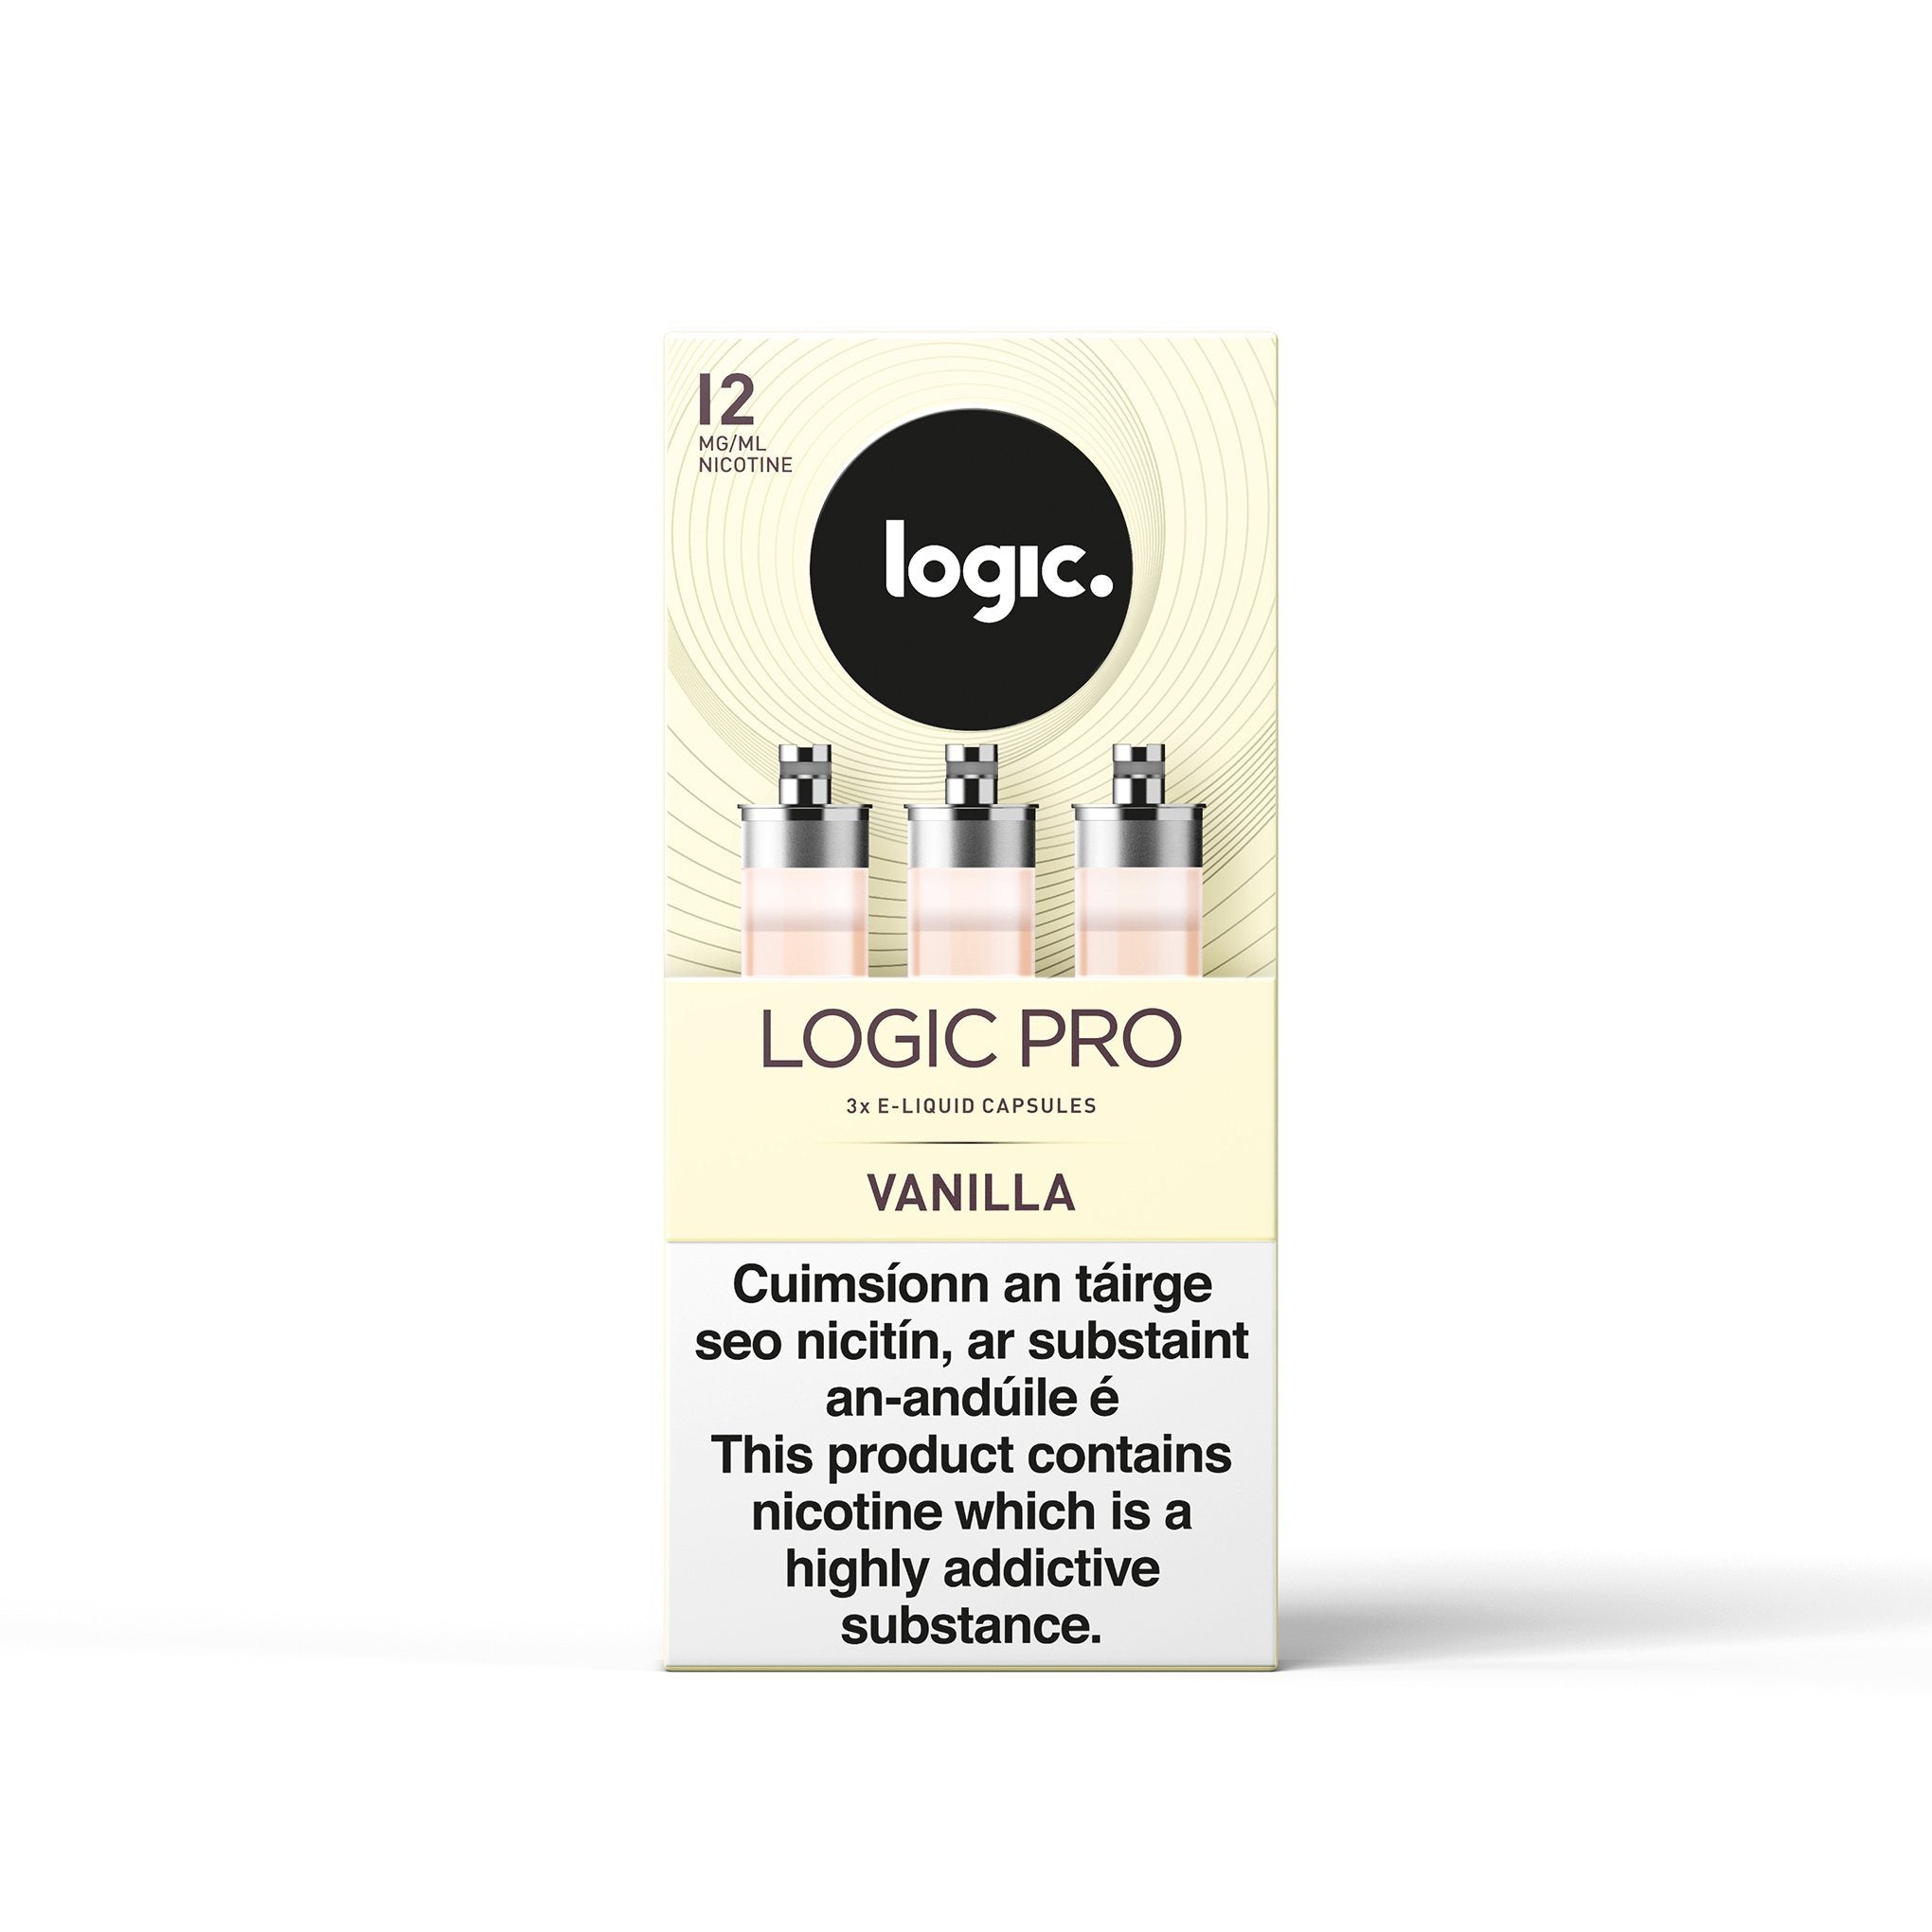 Logic Pro Capsules Vanilla 12MG - Medium Nicotine